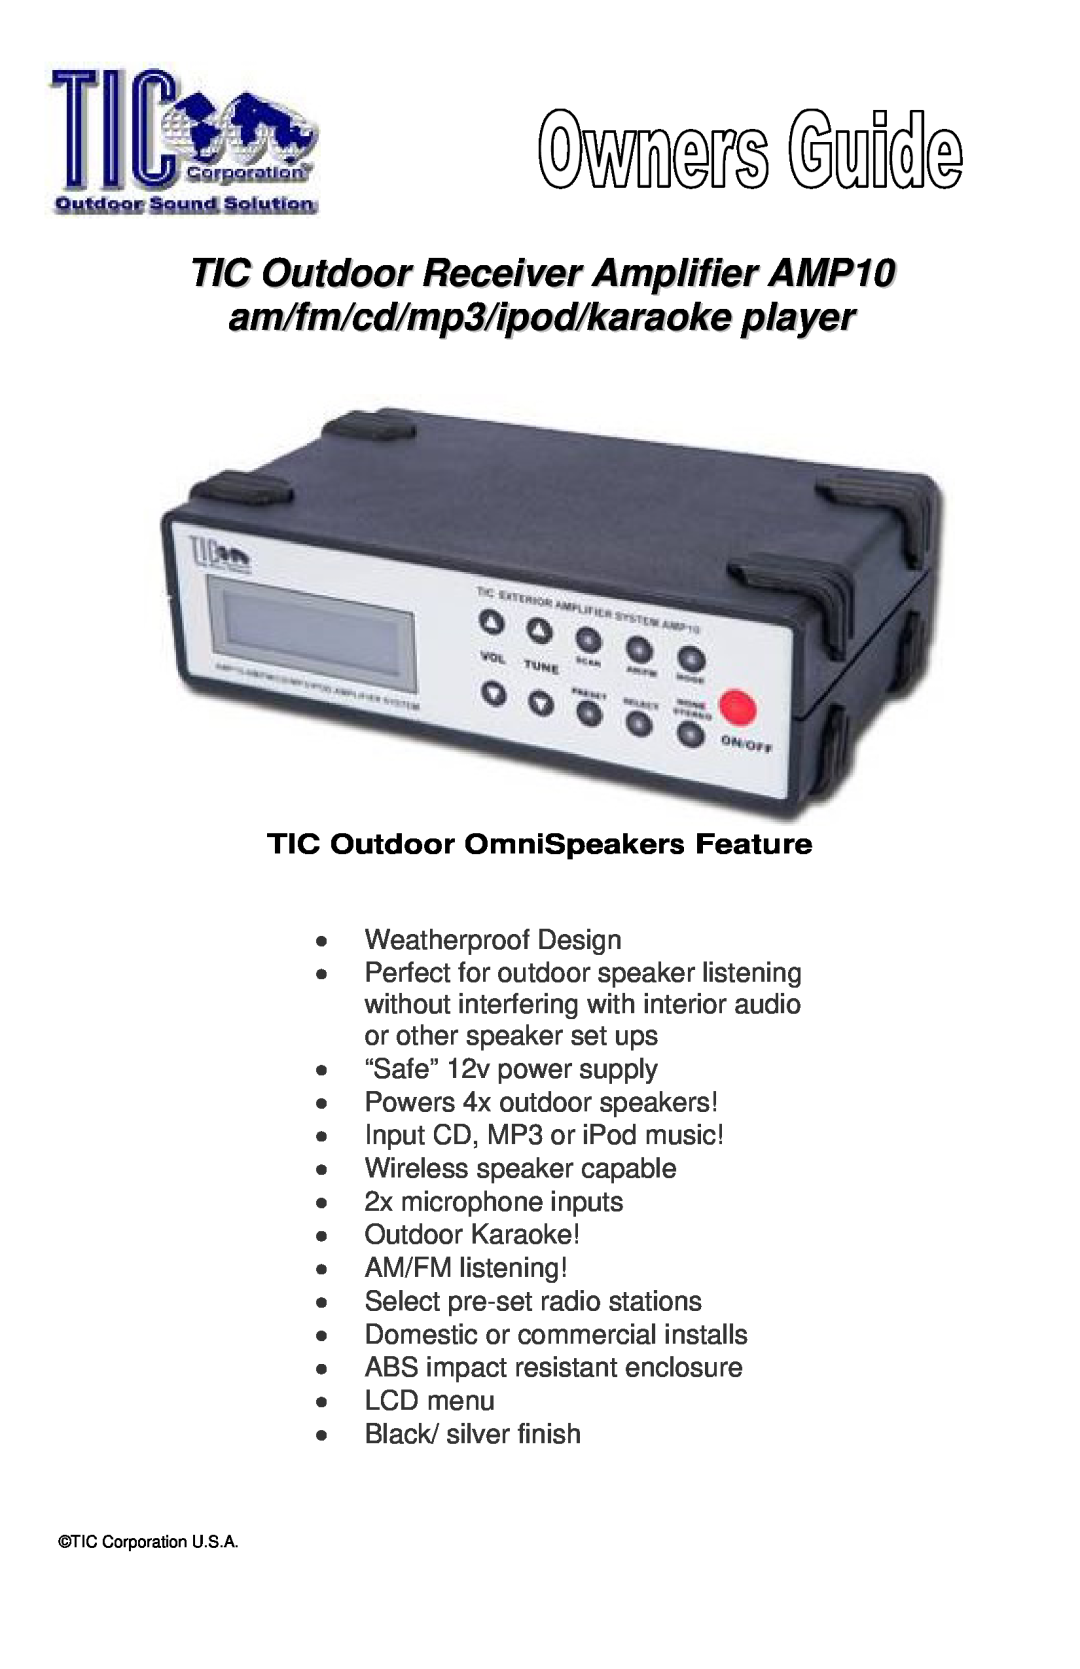 TIC manual TIC Outdoor Receiver Amplifier AMP10, am/fm/cd/mp3/ipod/karaoke player, TIC Outdoor OmniSpeakers Feature 